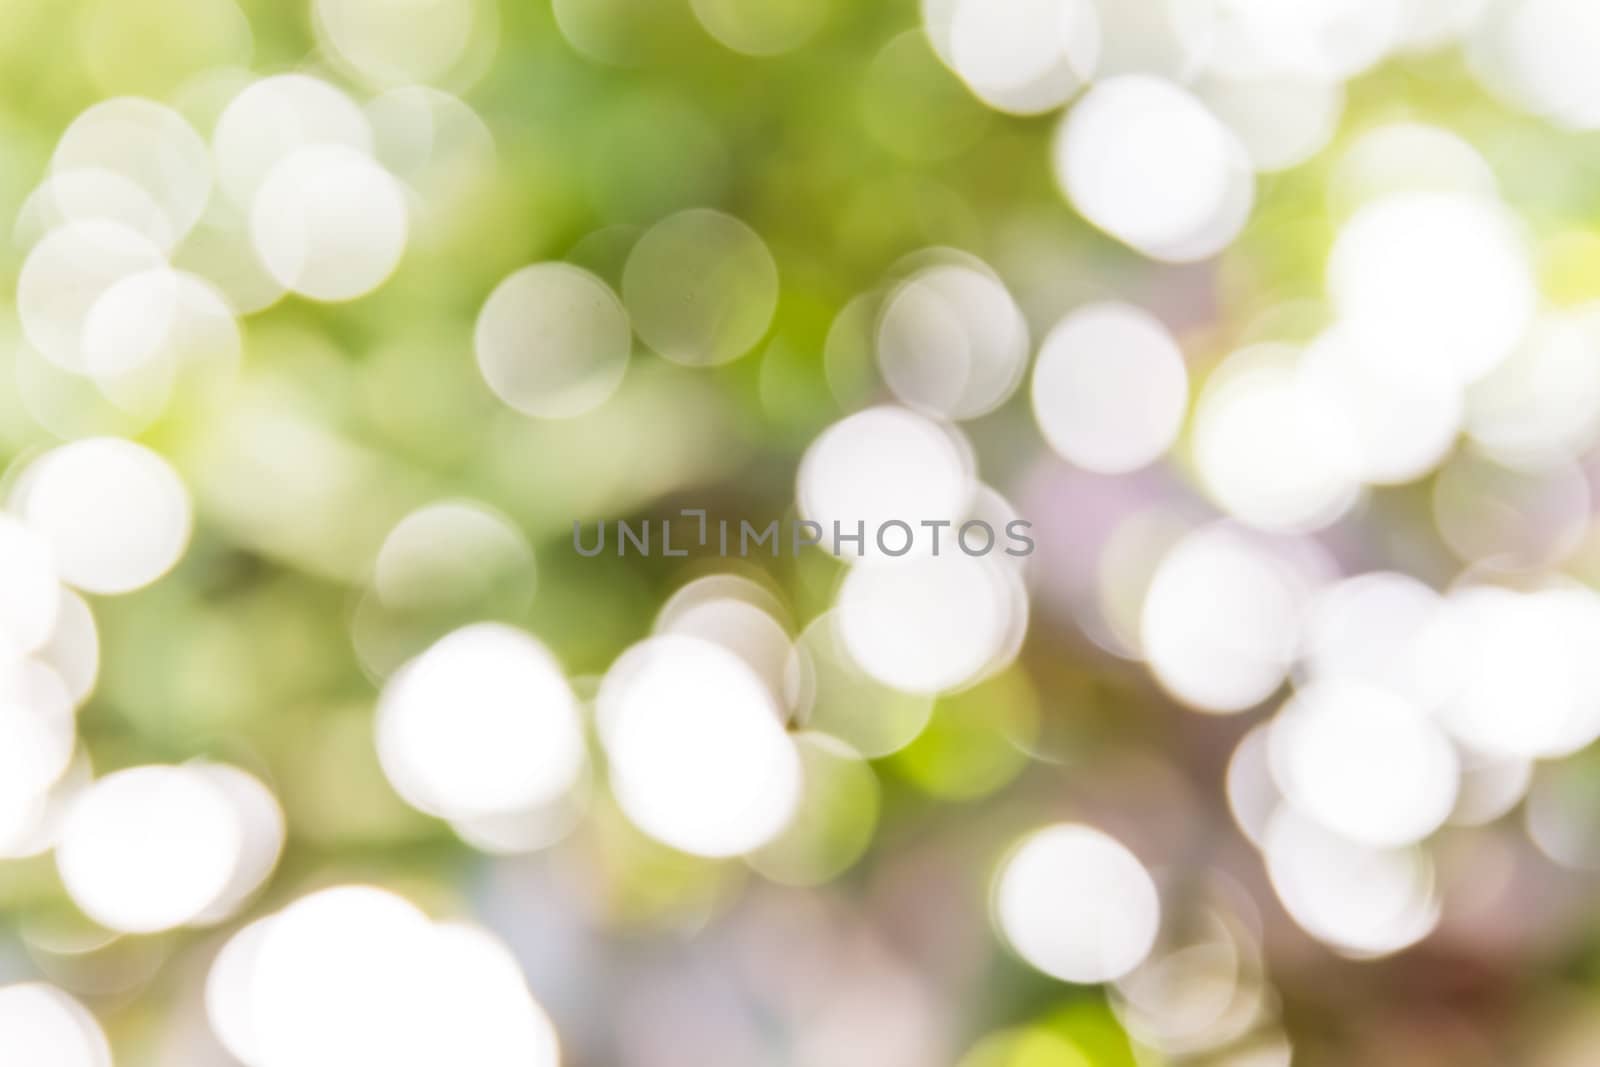 Photo of blurred lights white sparkles.